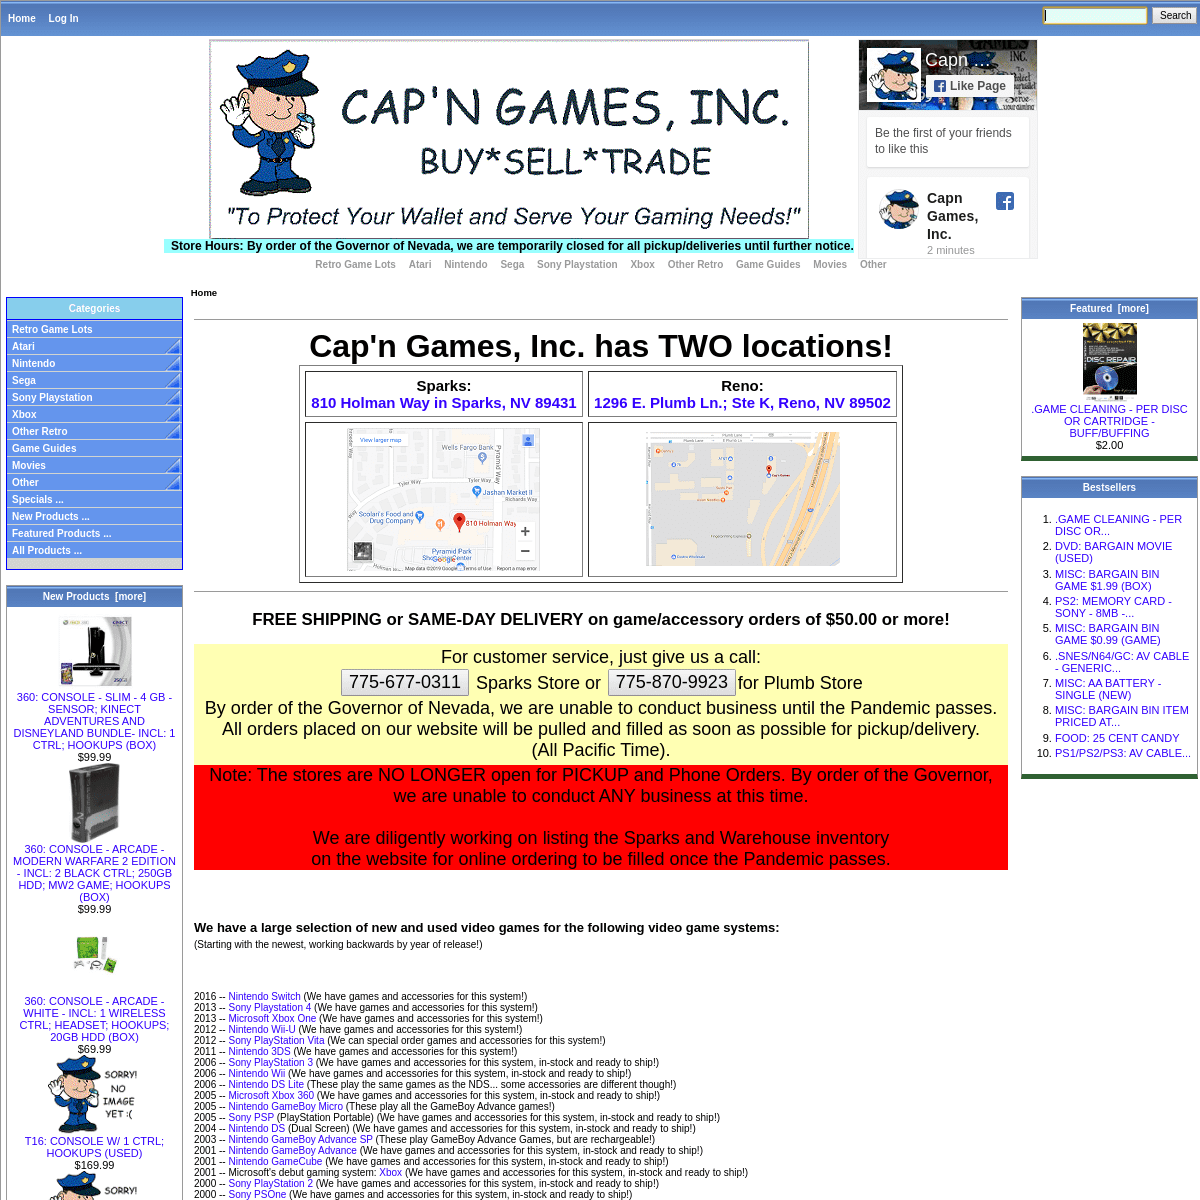 A complete backup of capngames.com